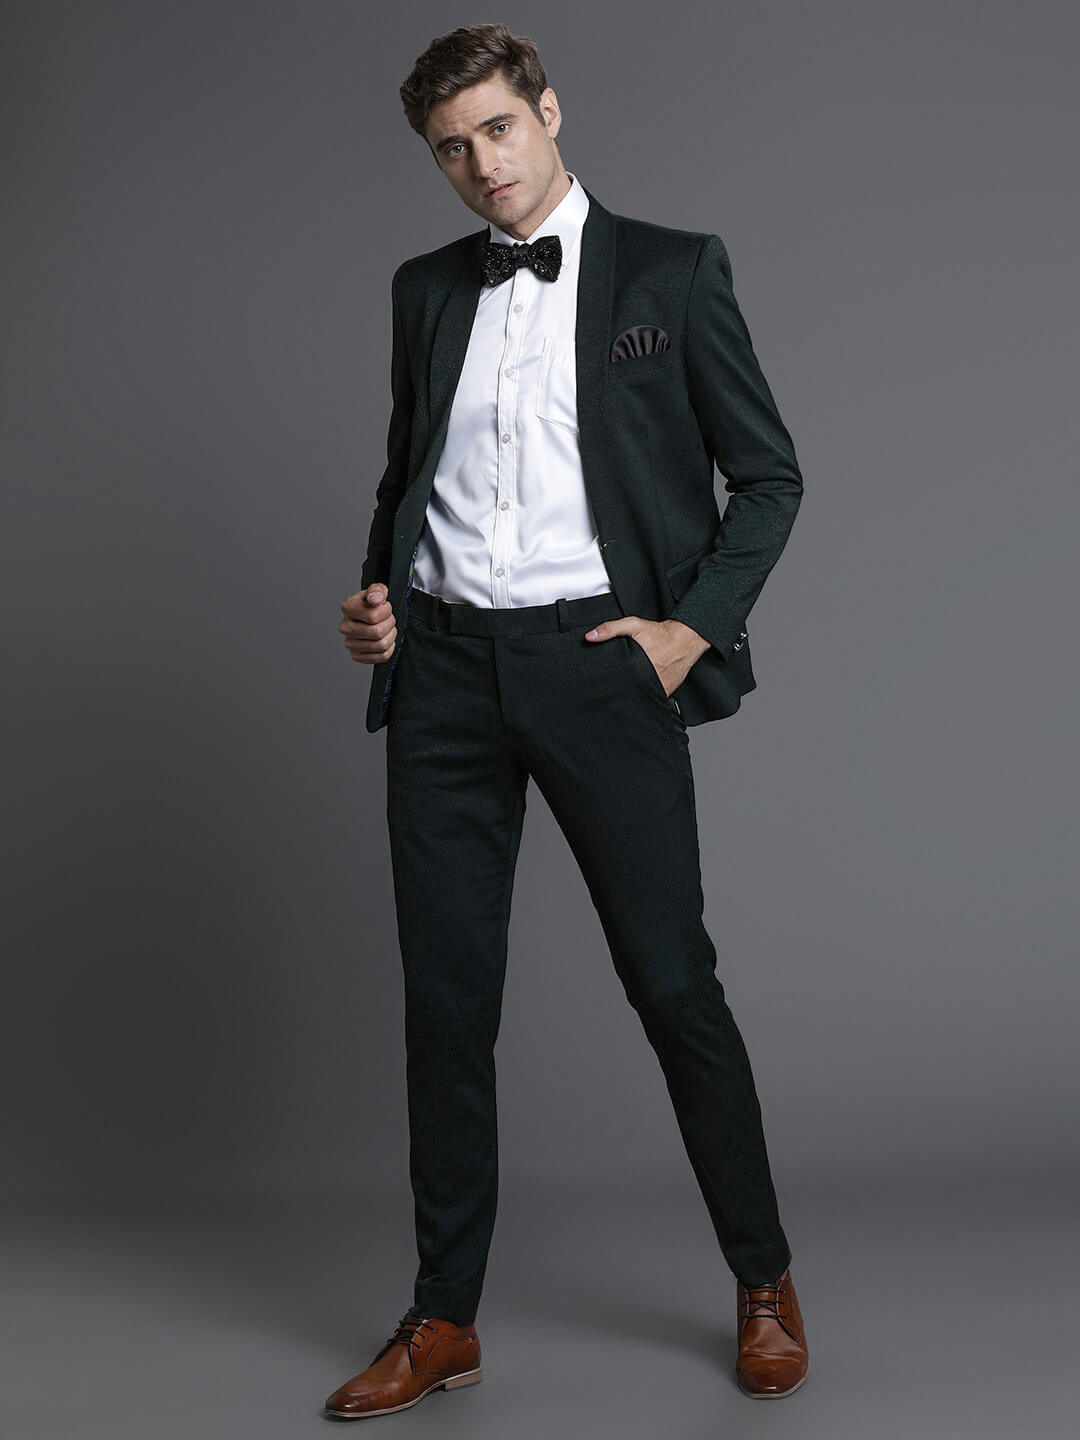 The London Collection Suiting Check design suit for Men | Mens fashion suits,  Dress suits for men, Fashion suits for men